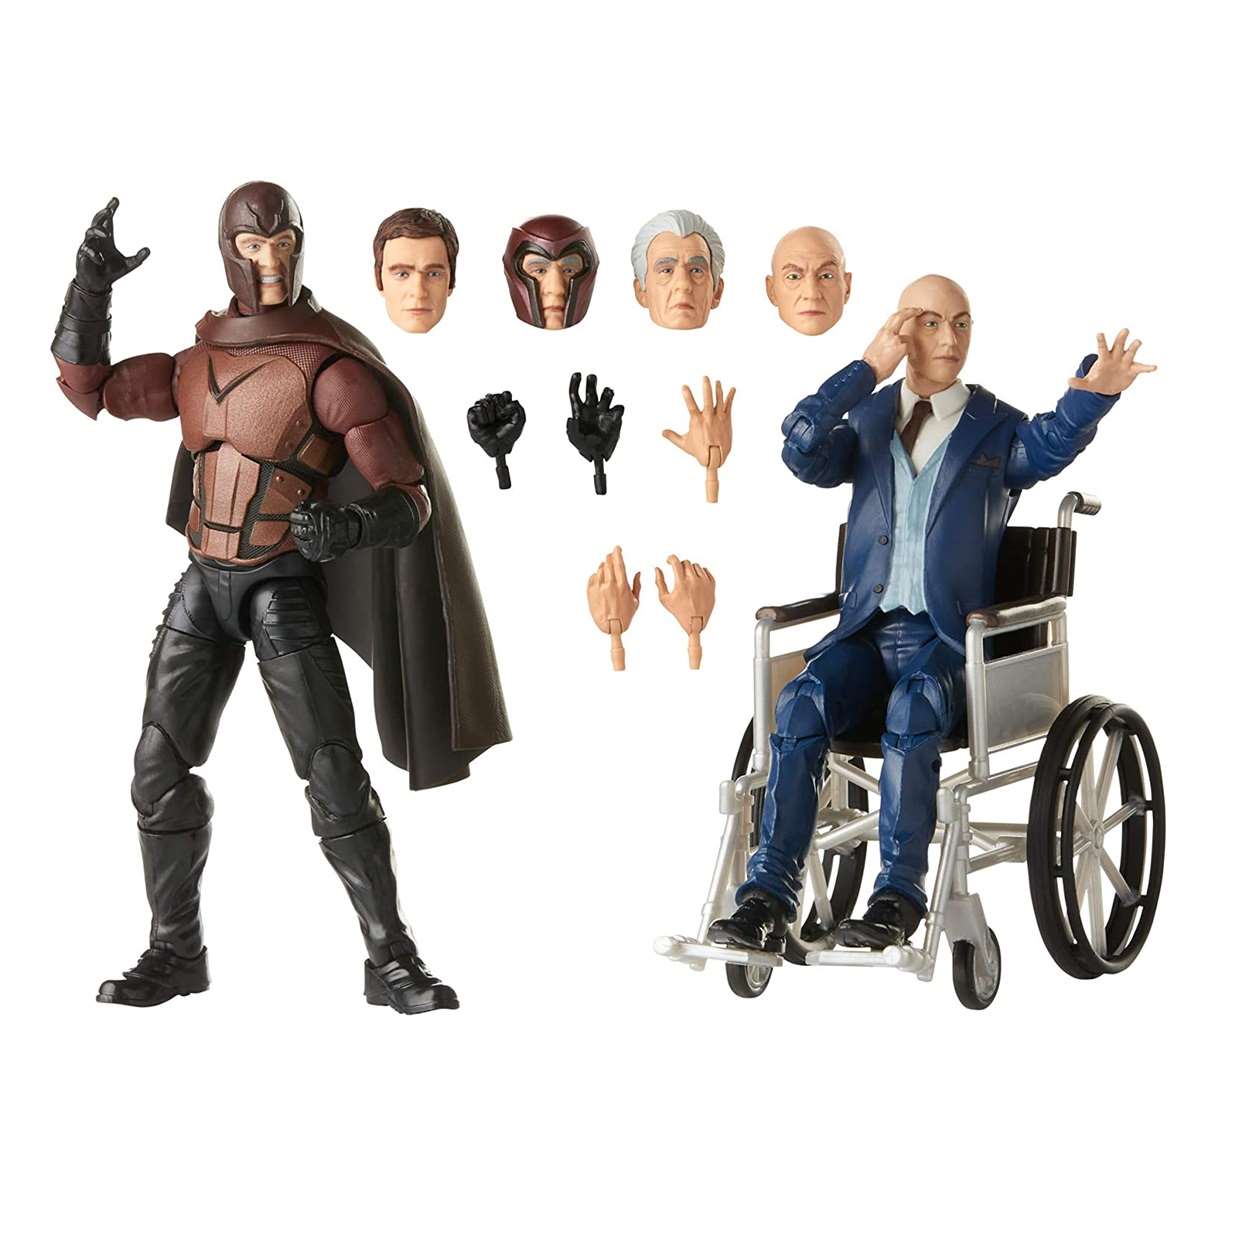 Pack 2 Figuras Magneto Y Professor X Marvel Legends Series